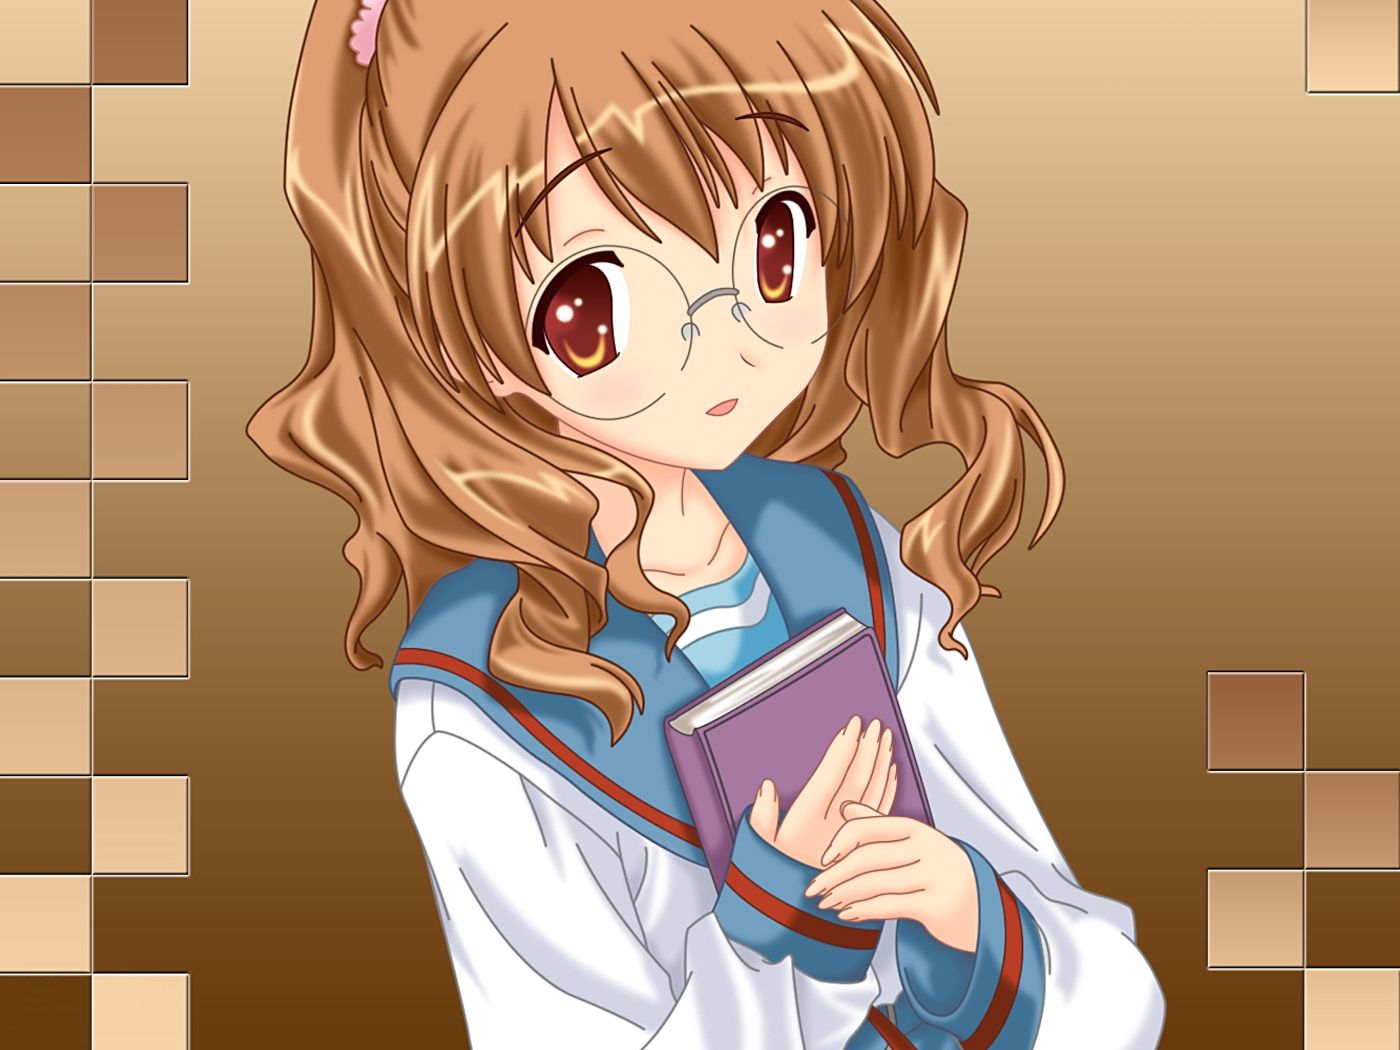 Anime Kawaii Woman With Glasses Reading Book Background, Kawaii